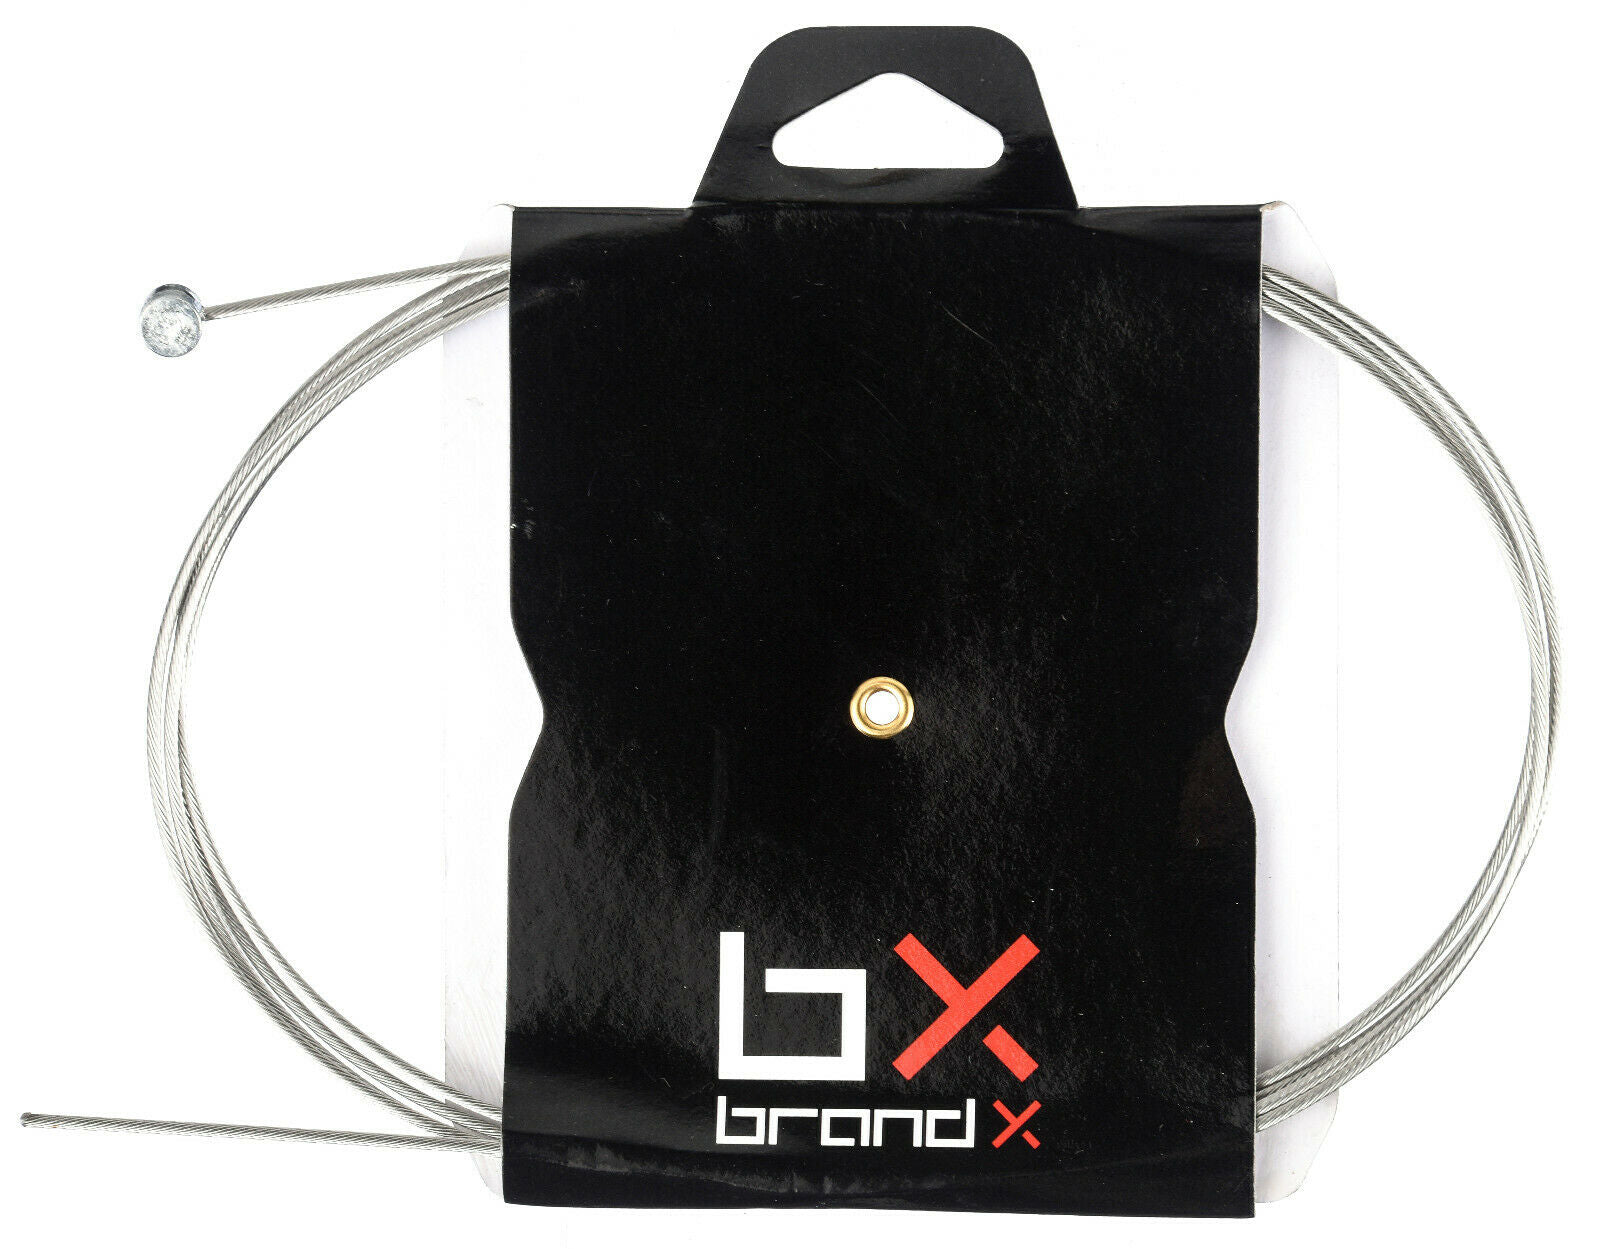 Brand-X Elite MTB Stainless Steel Brake Cable Inner – 2000mm - Buy 1 Get 1 Free - Sportandleisure.com (6967882809498)